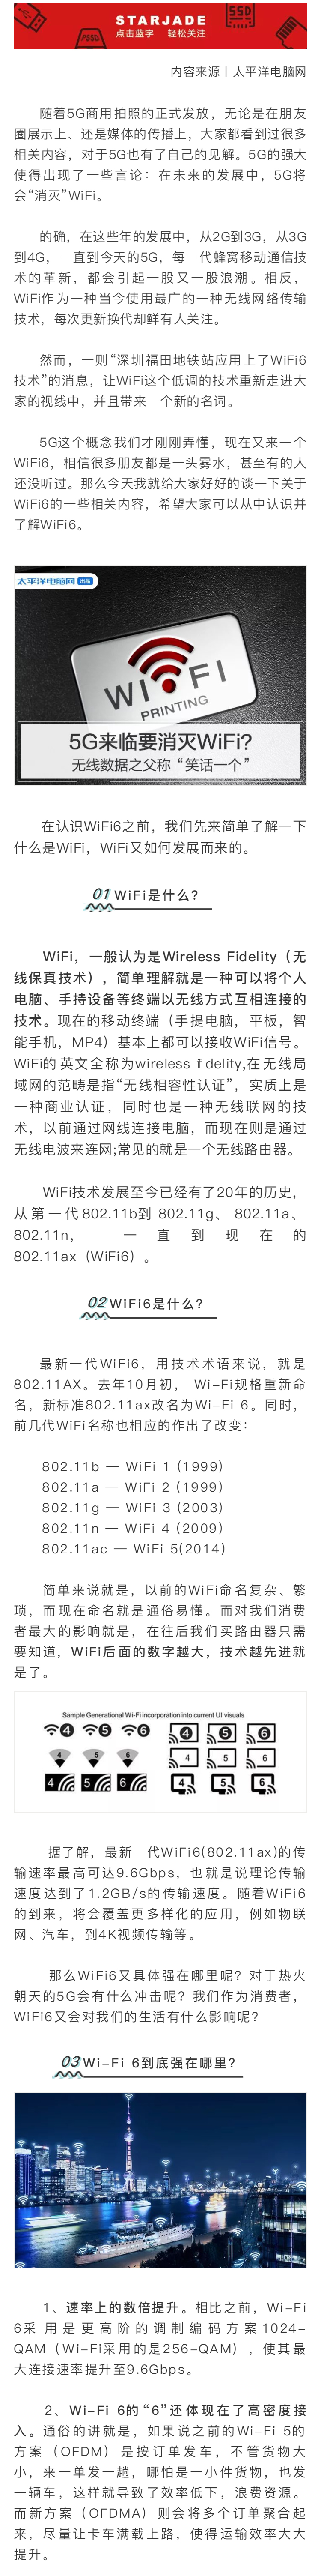 20190802_1130_yiban_screenshot_01.jpg